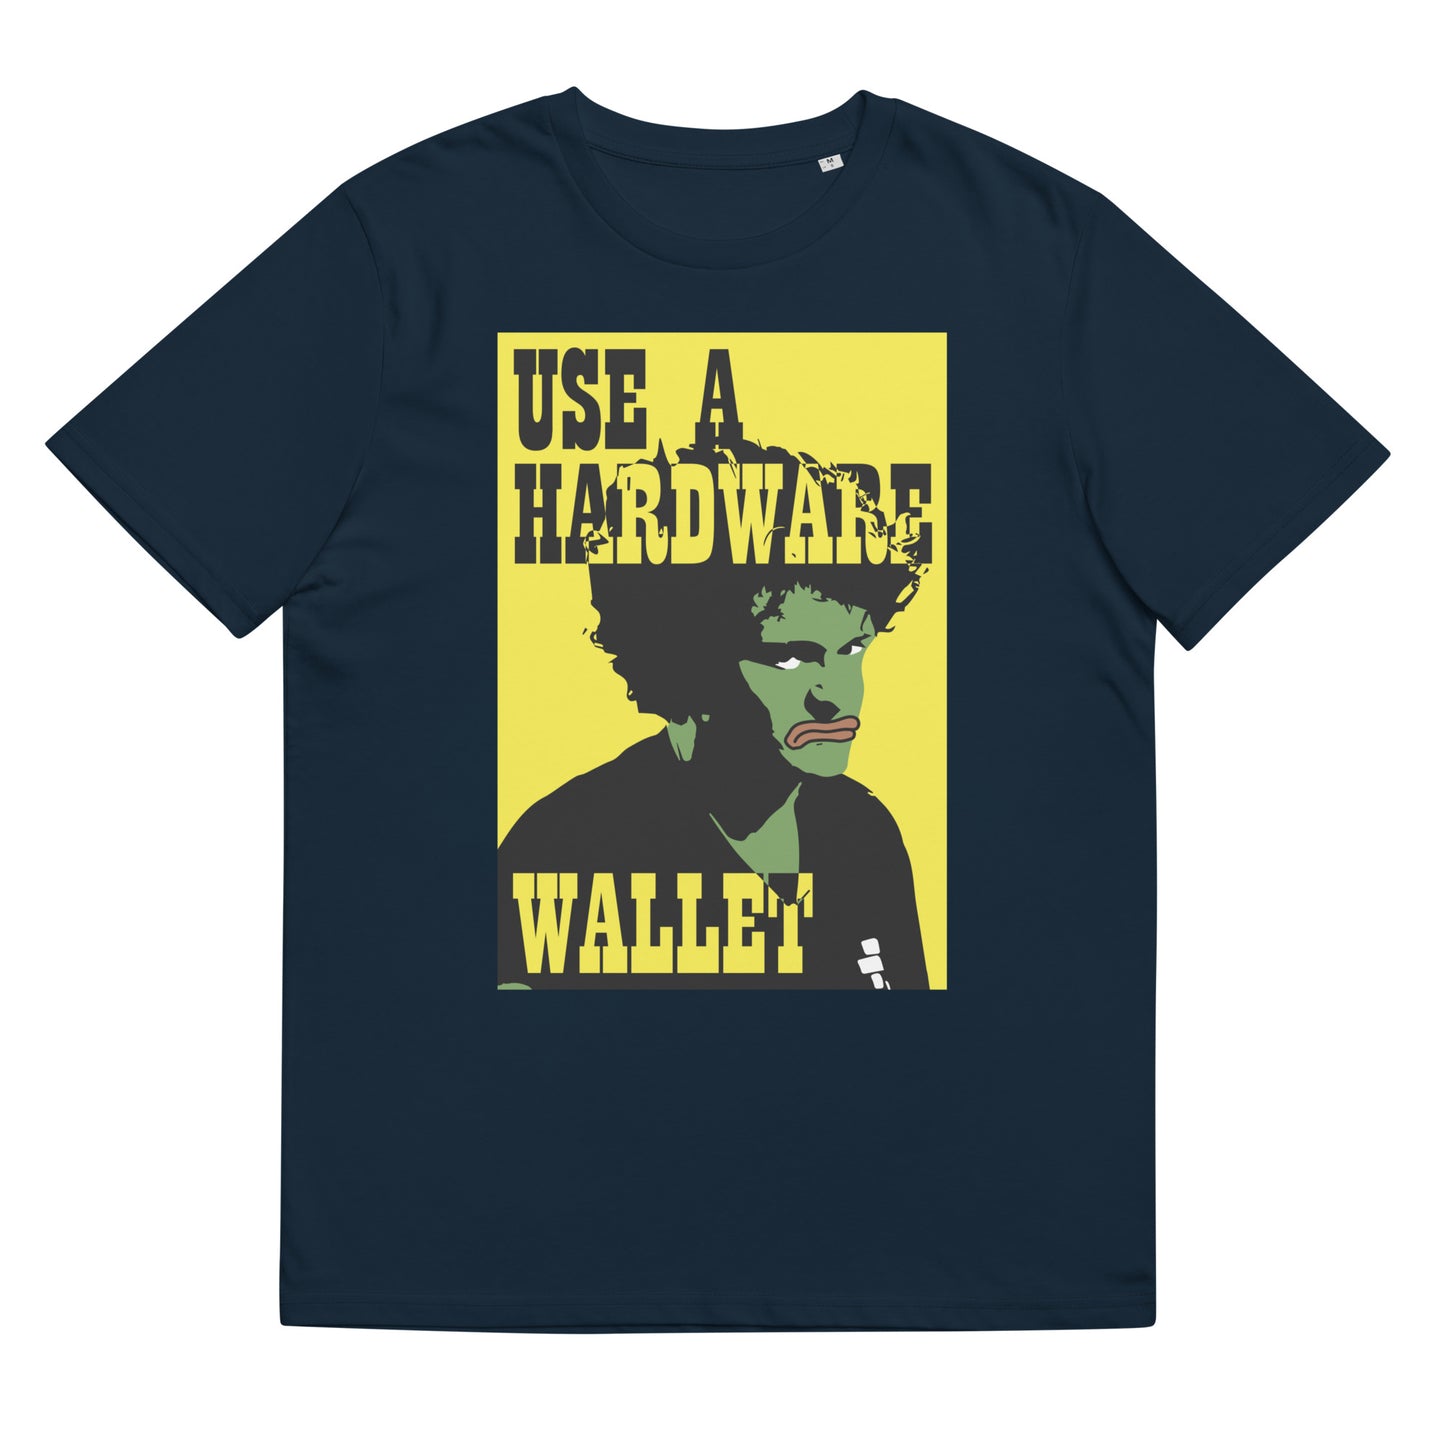 use-hardware-wallet-t-shirt-navy